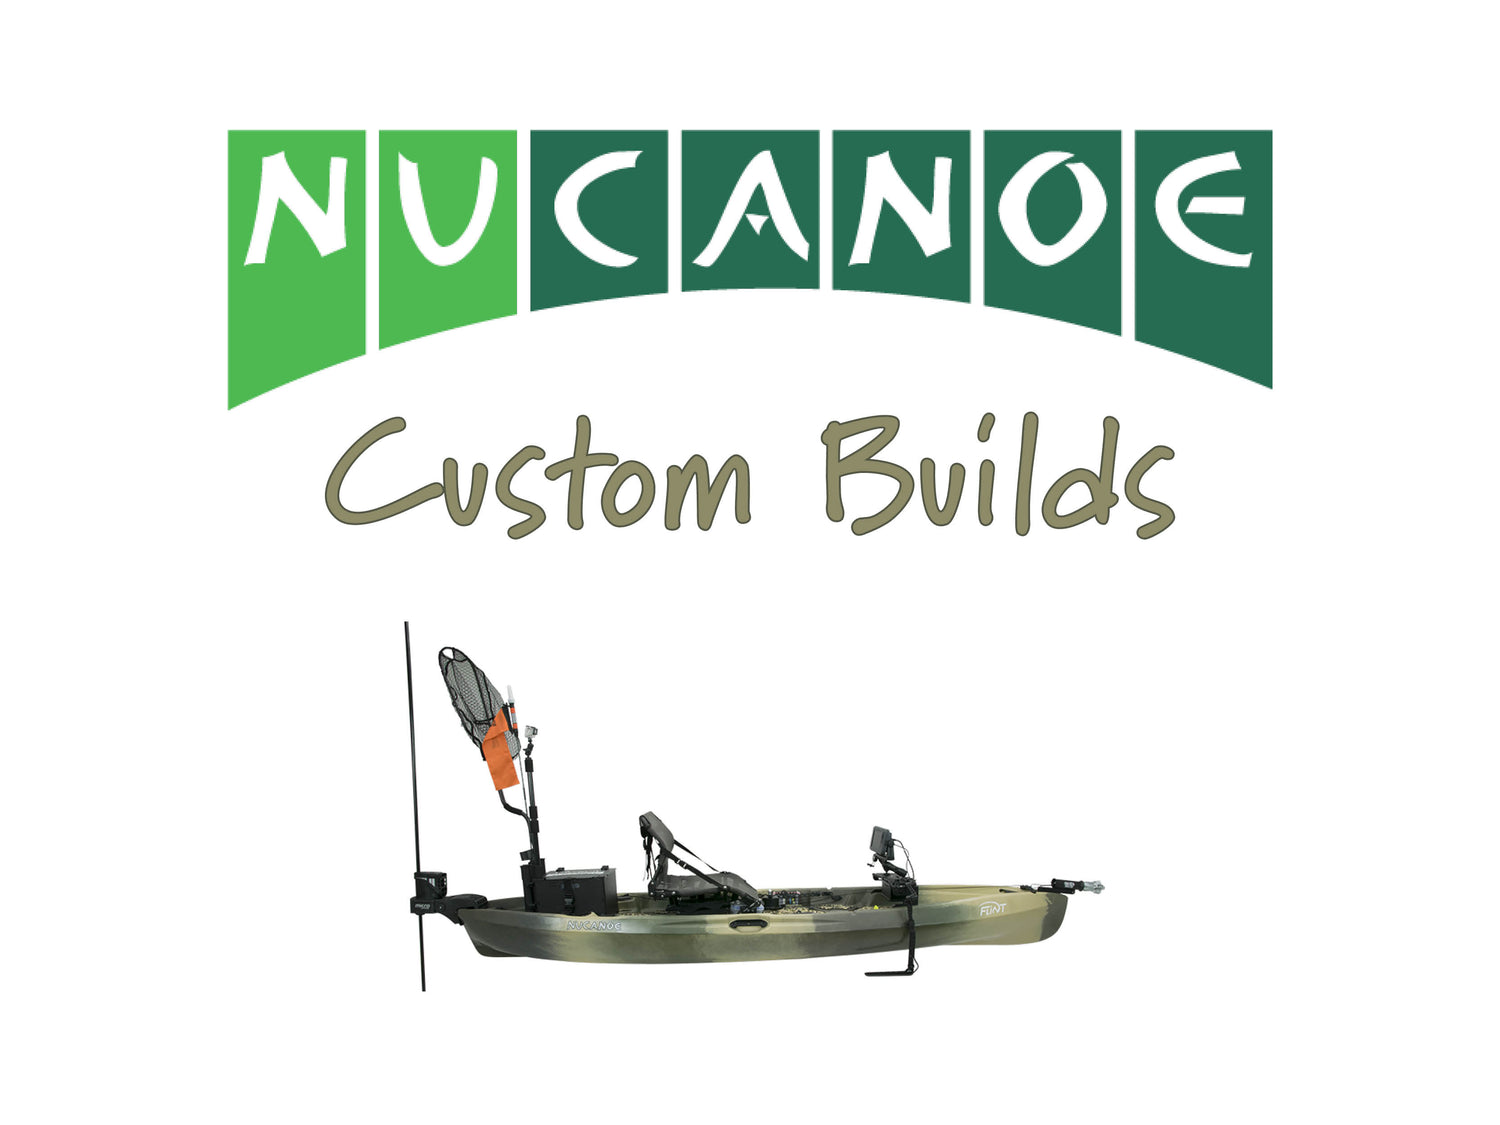 NuCanoe Customs | Flint Big Water & Tournament Setup